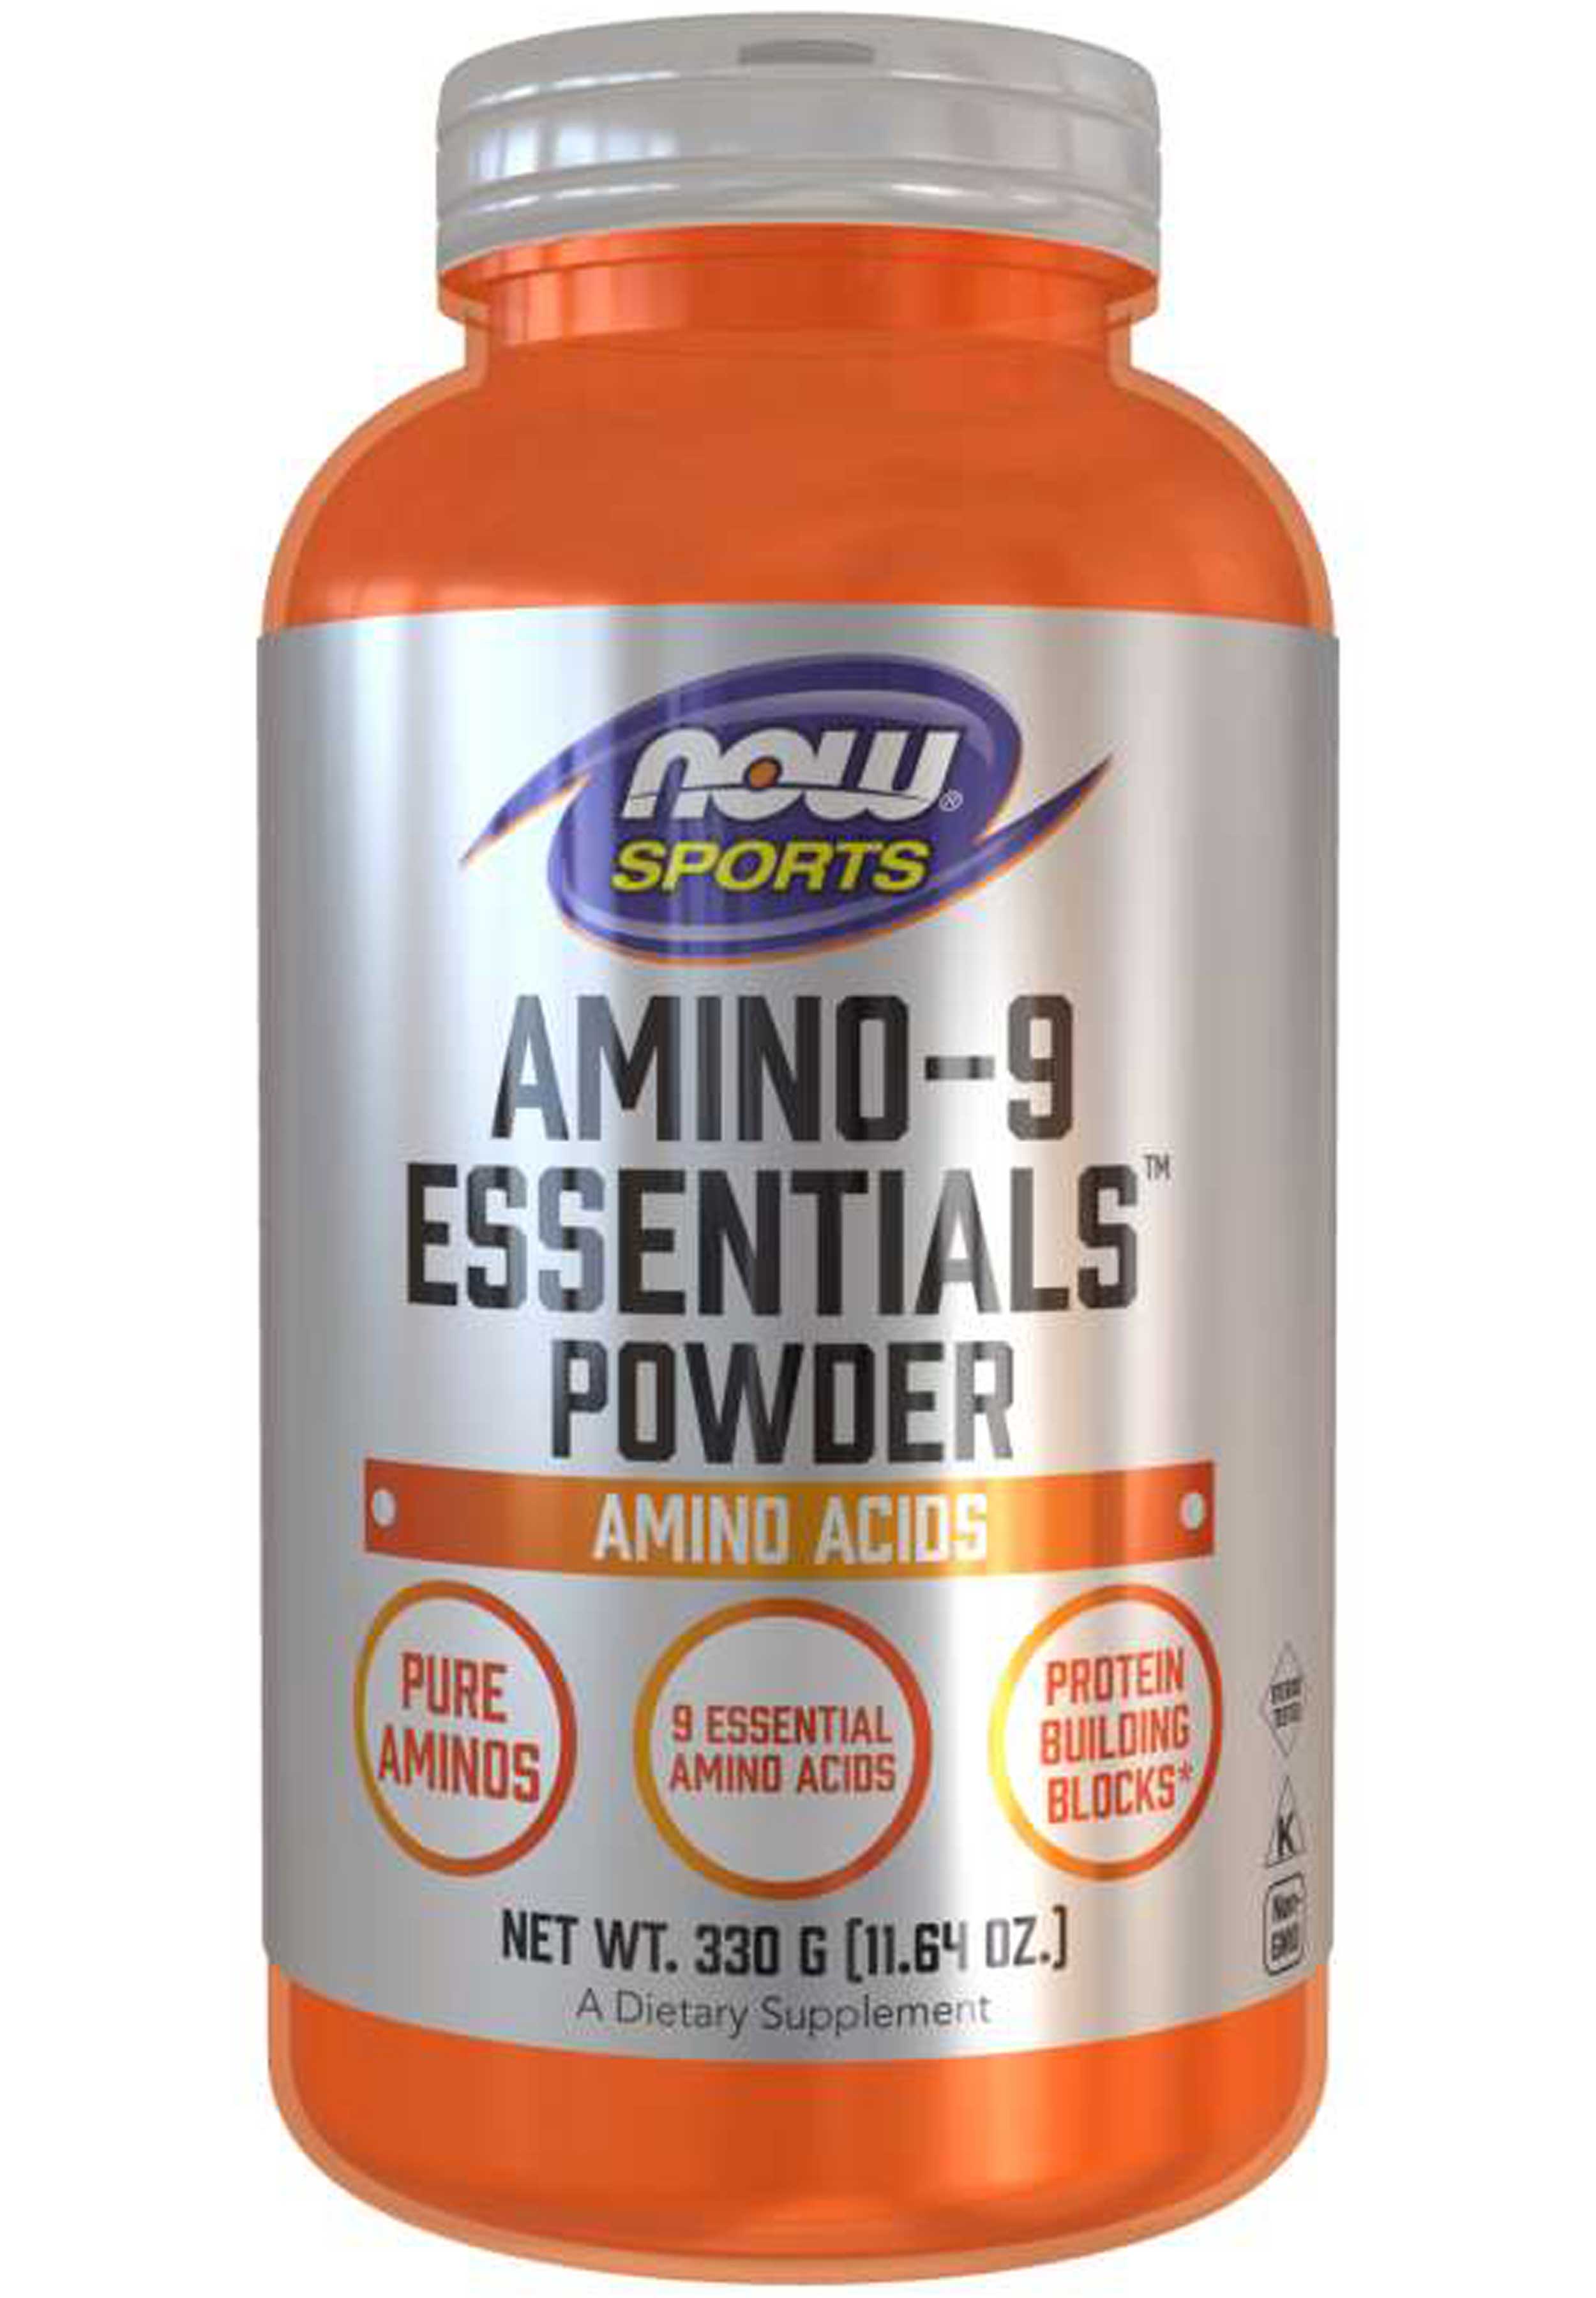 NOW Sports Amino-9 Essentials Powder